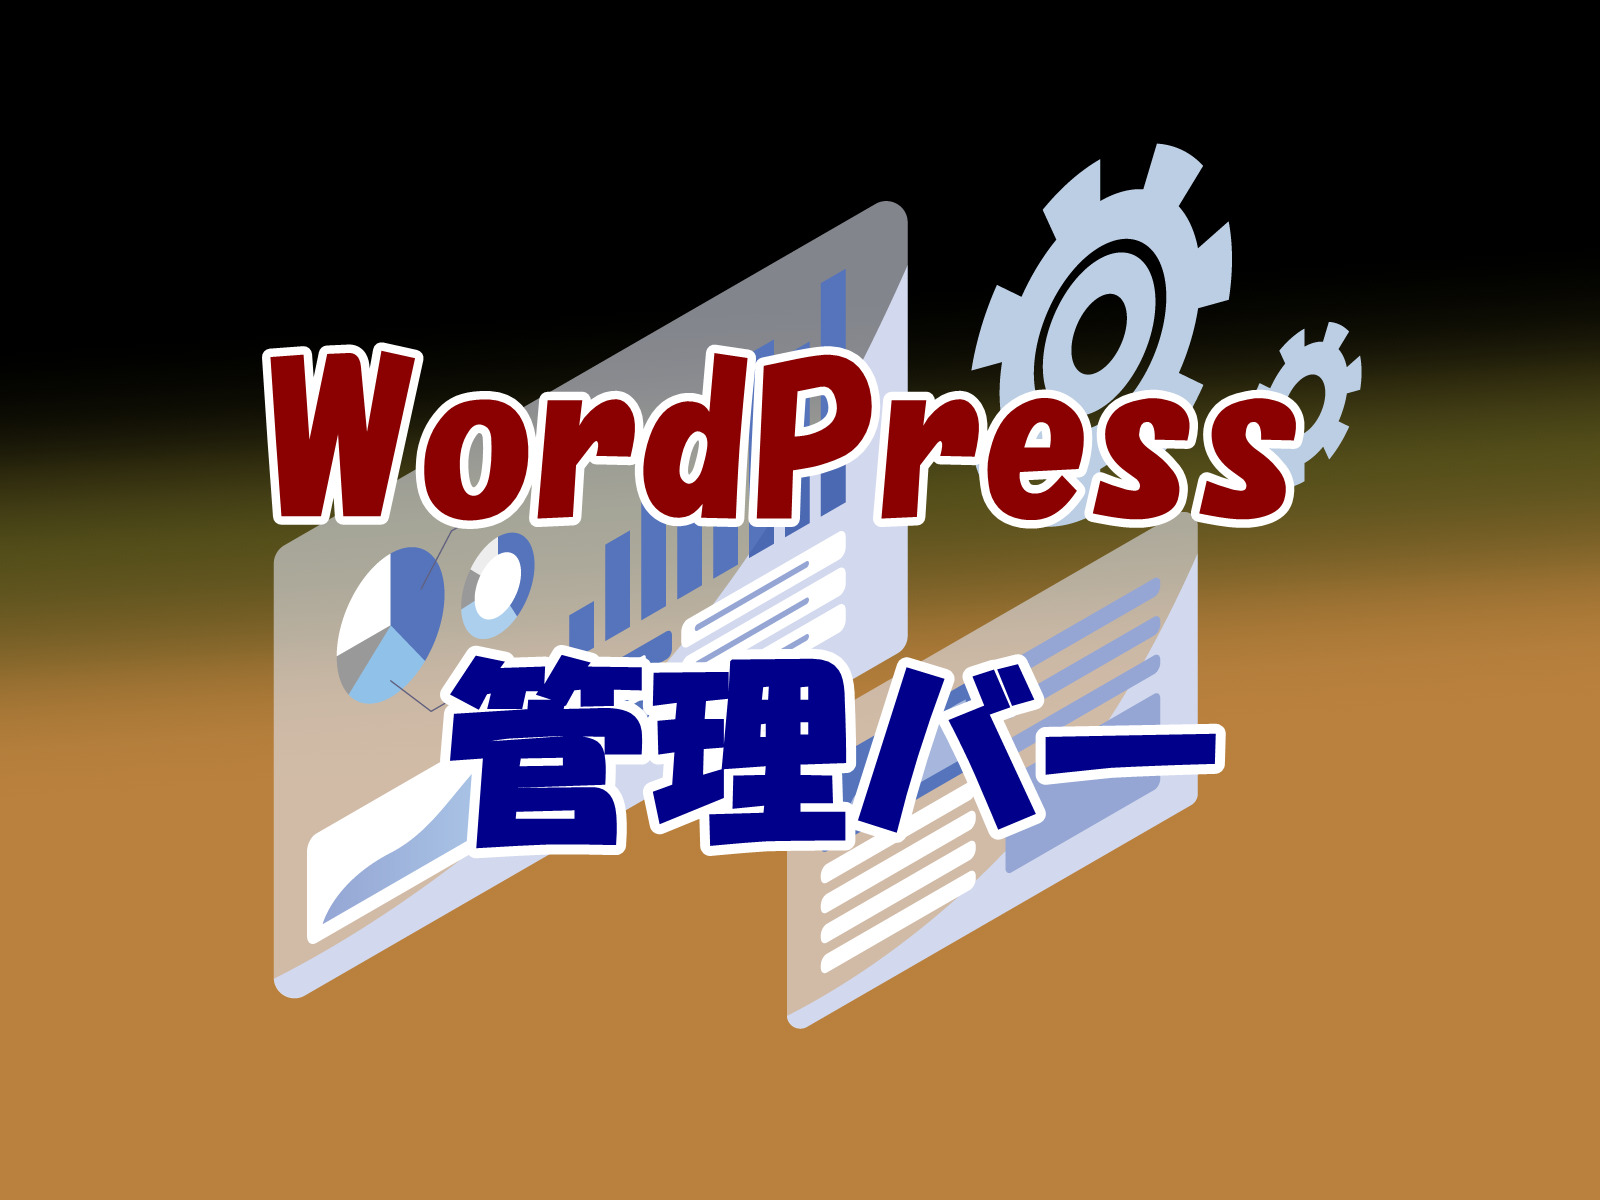 【WordPress】管理バーのカスタマイズ方法、追加・削除・文字変更【WP】